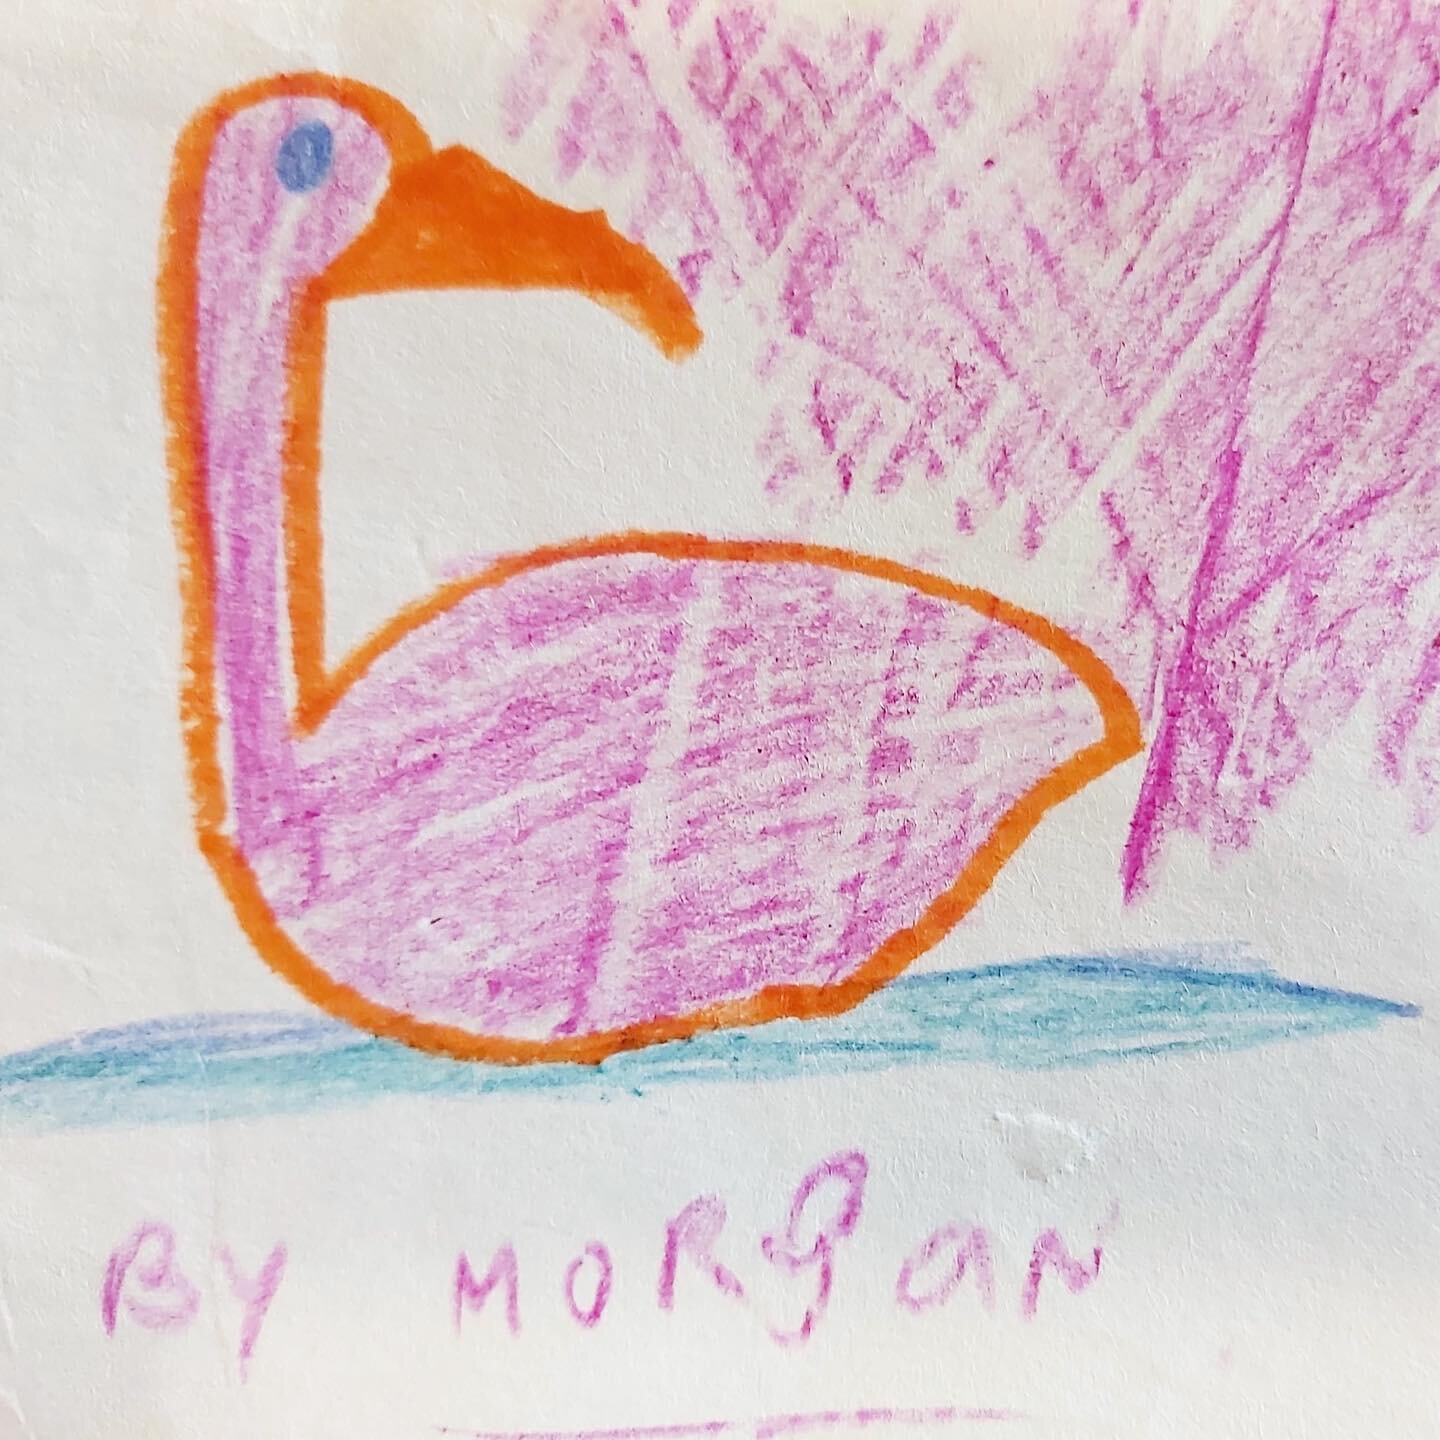 Thank you Morgan! Loving the pink leaf rubbing and sitting bird composition, happy spring 🌷
.
.
.

#arkbench #communityart #community #lakecountry #okanaganlife #okanagan #foundart #artexchange #drawing #art  #pink #leafrubbing #bird